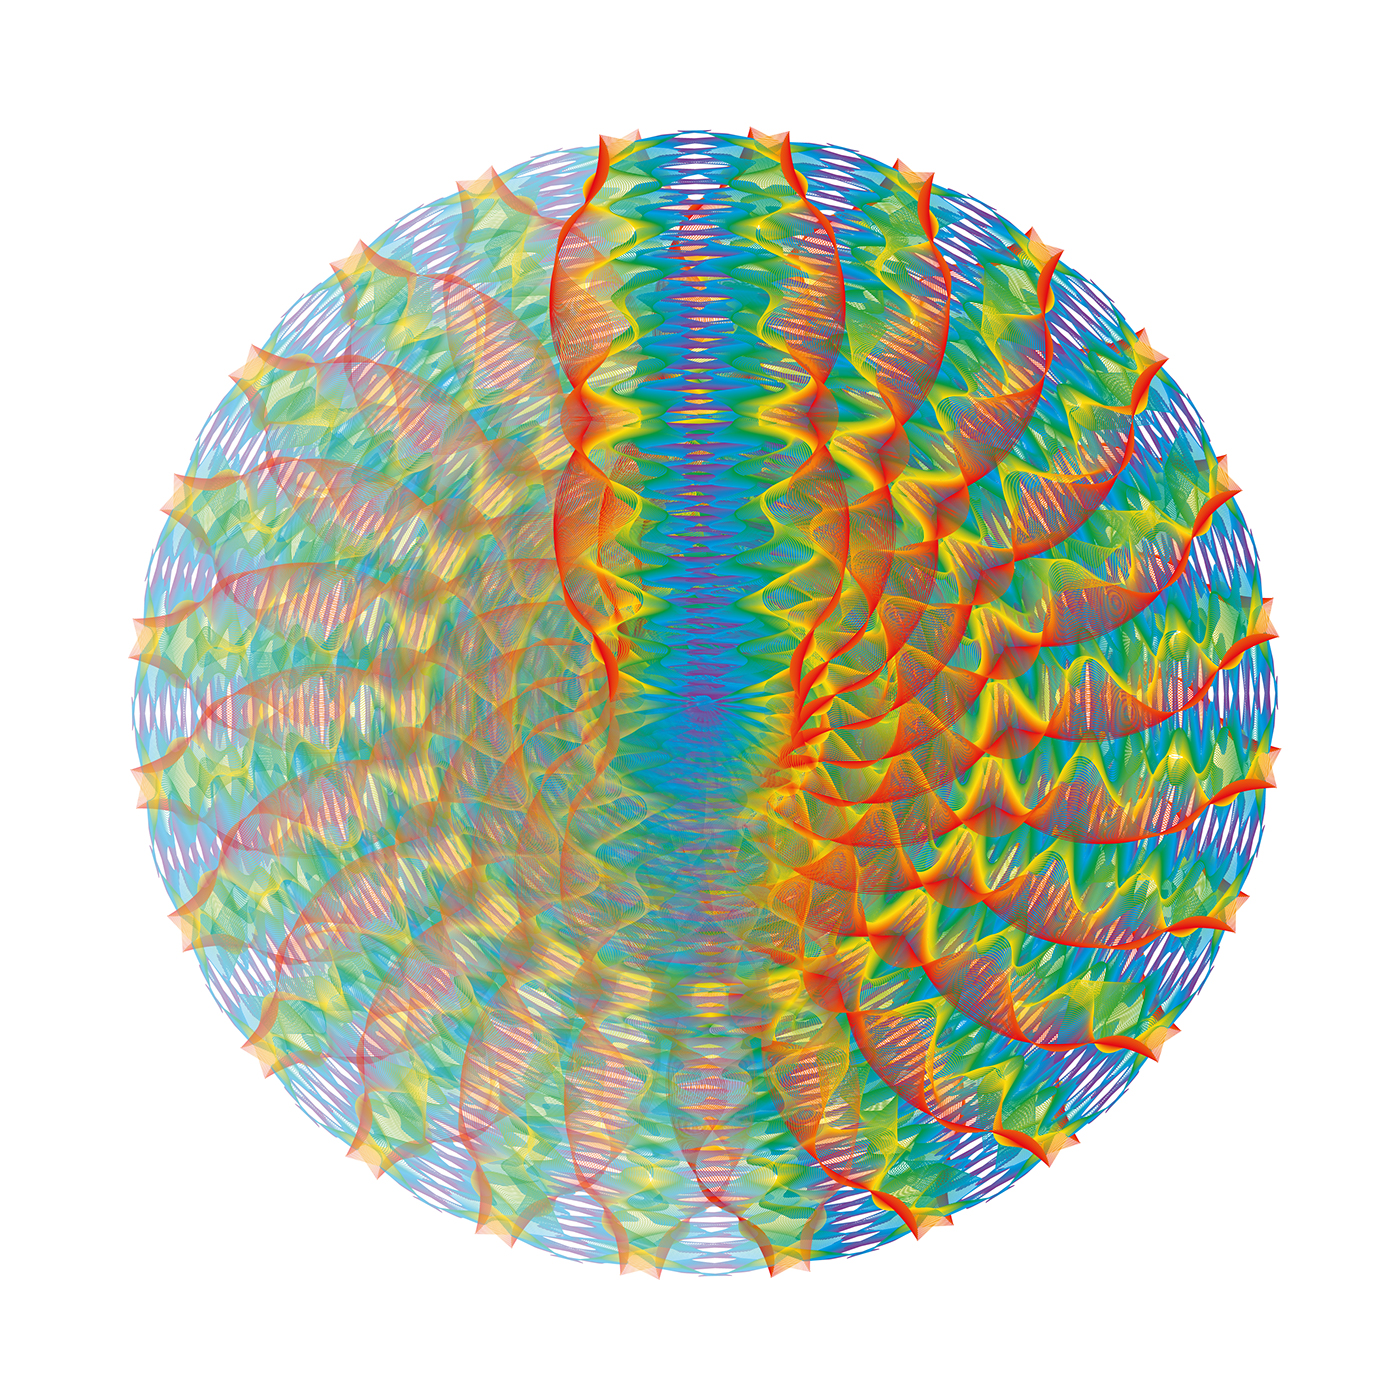 morfologia longinotti fadu color Color Spectrum espectro color Frequency frecuencia Morphology morfologia 2